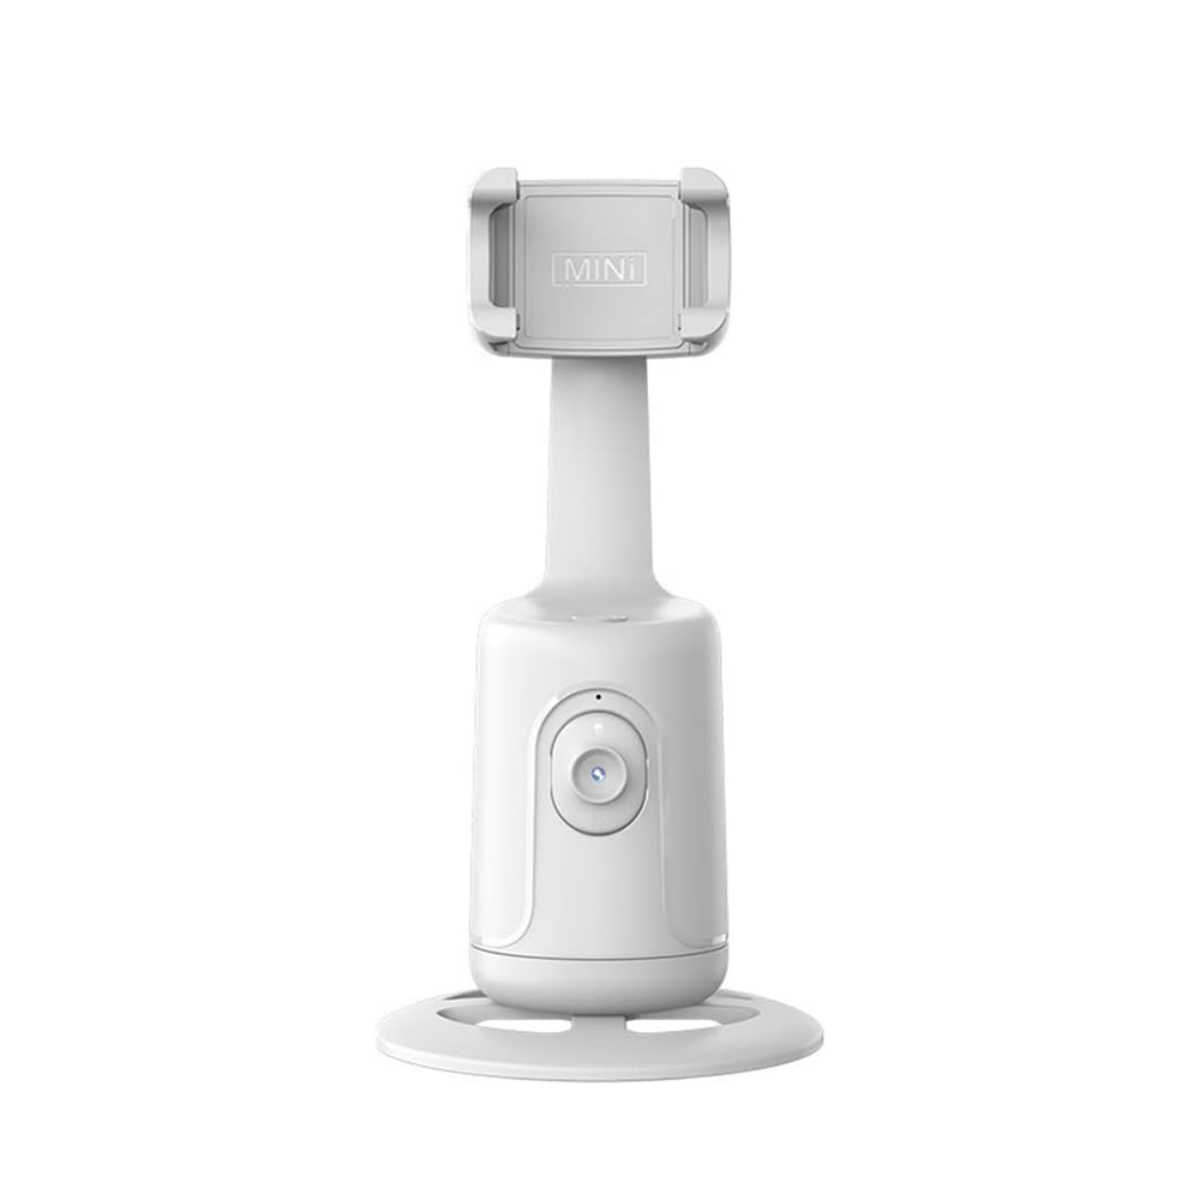 White robotic camera stand, labeled mini.